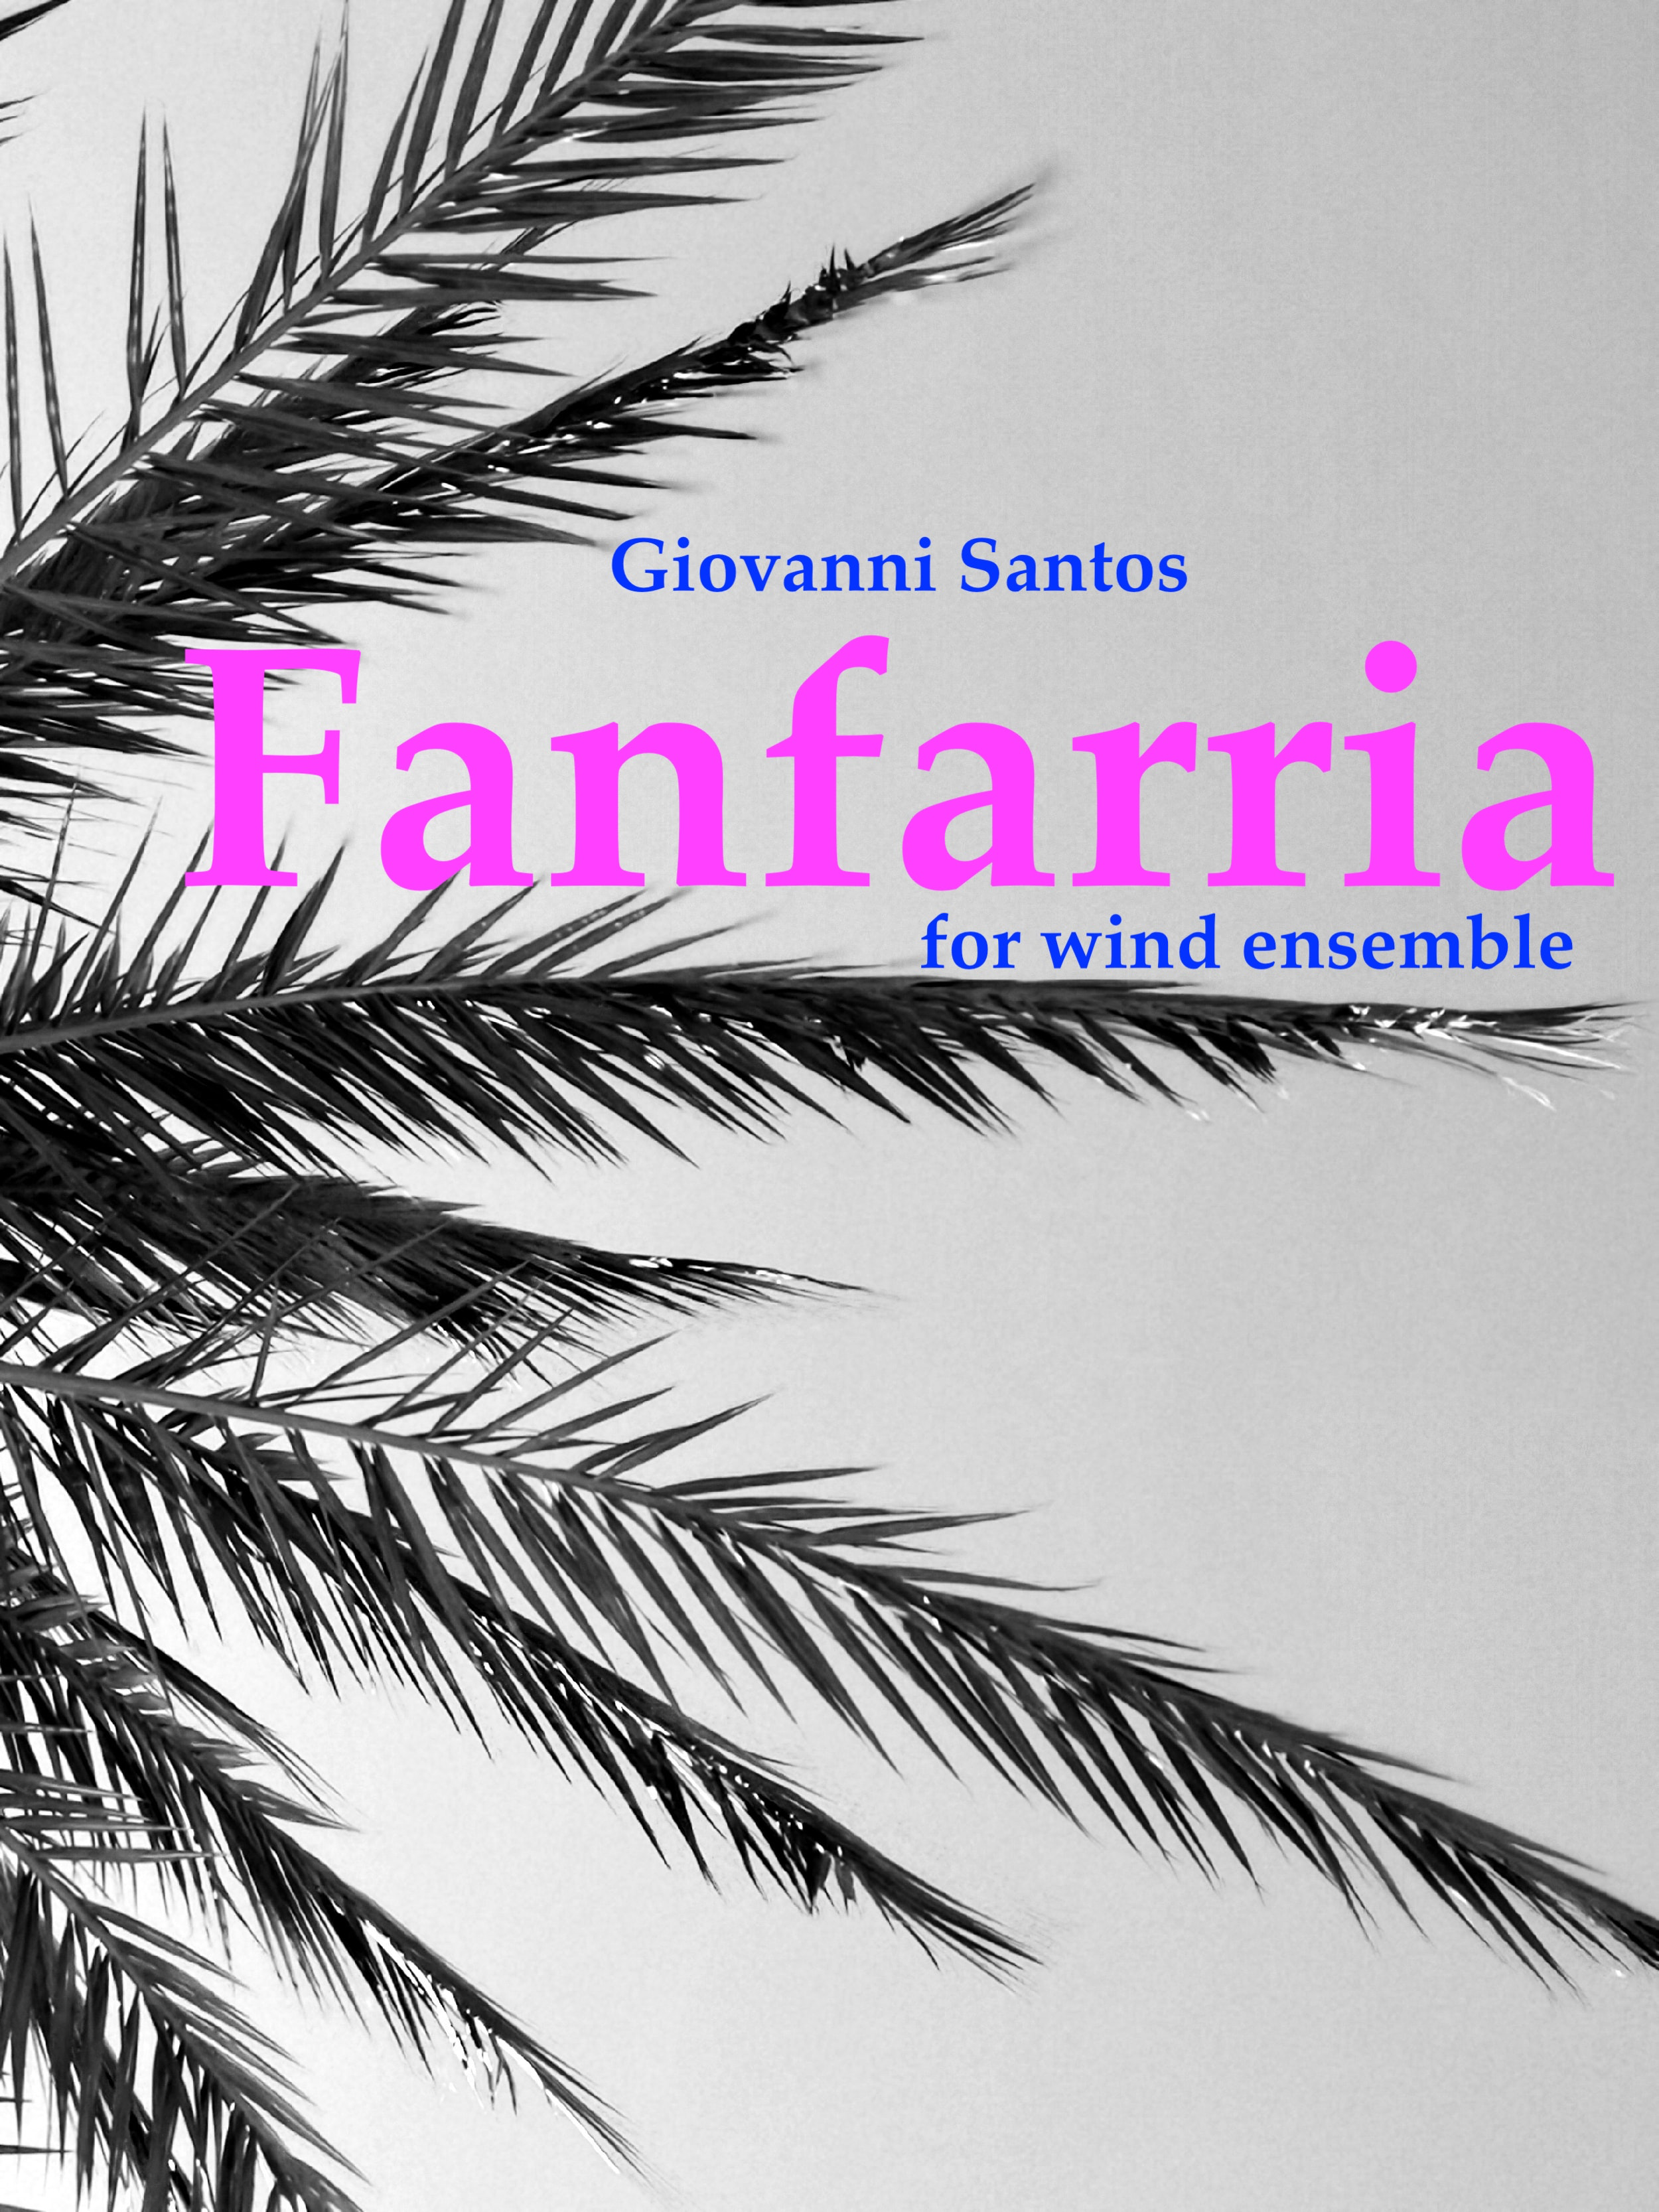 Fanfarria by Giovanni Santos